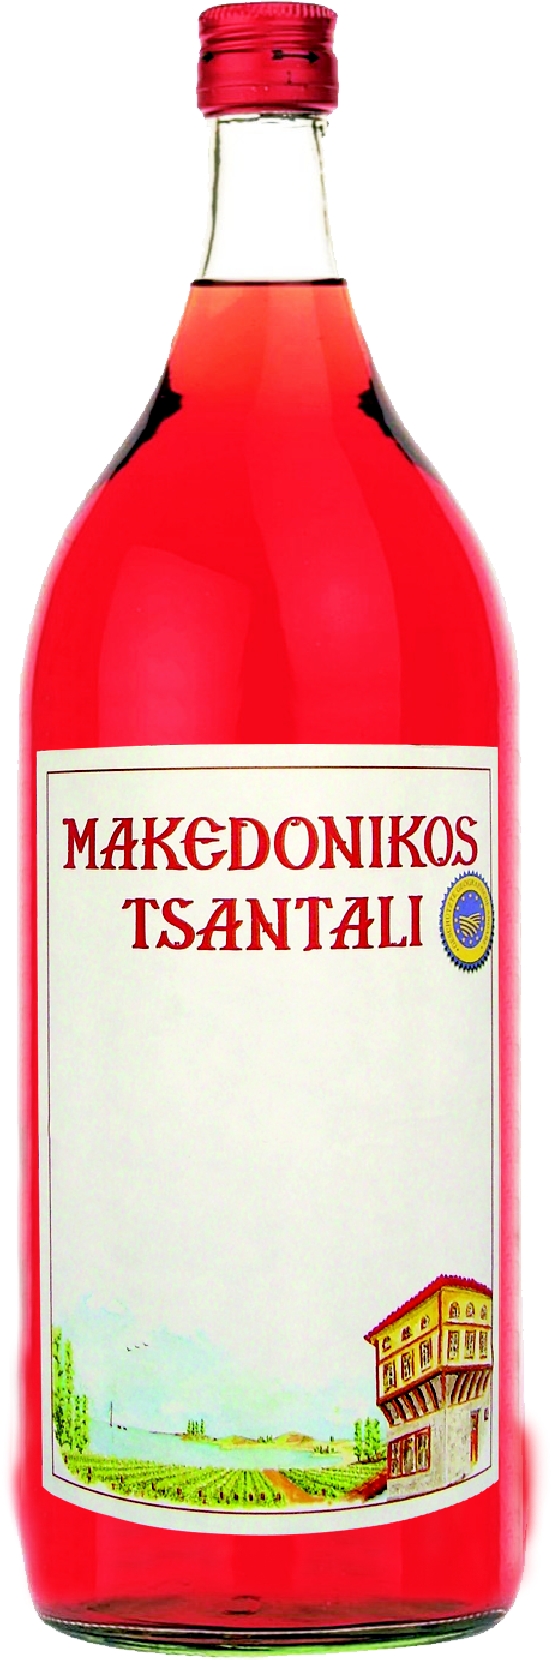 Tsantali Makedonikos